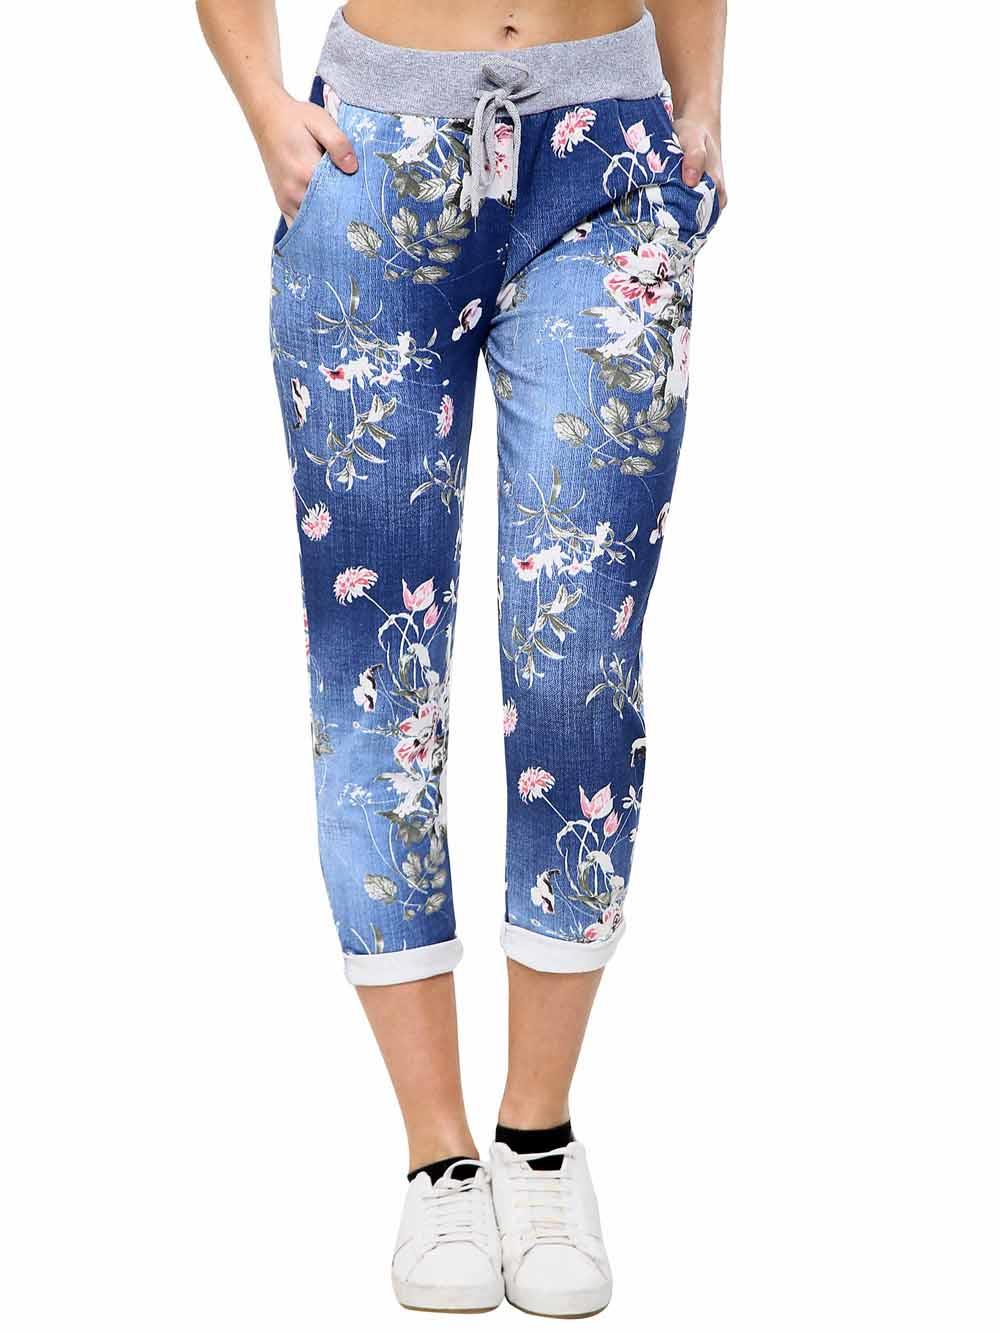 Floral Print Pocket Drawstring Trouser - Love My Fashions - Womens Fashions UK